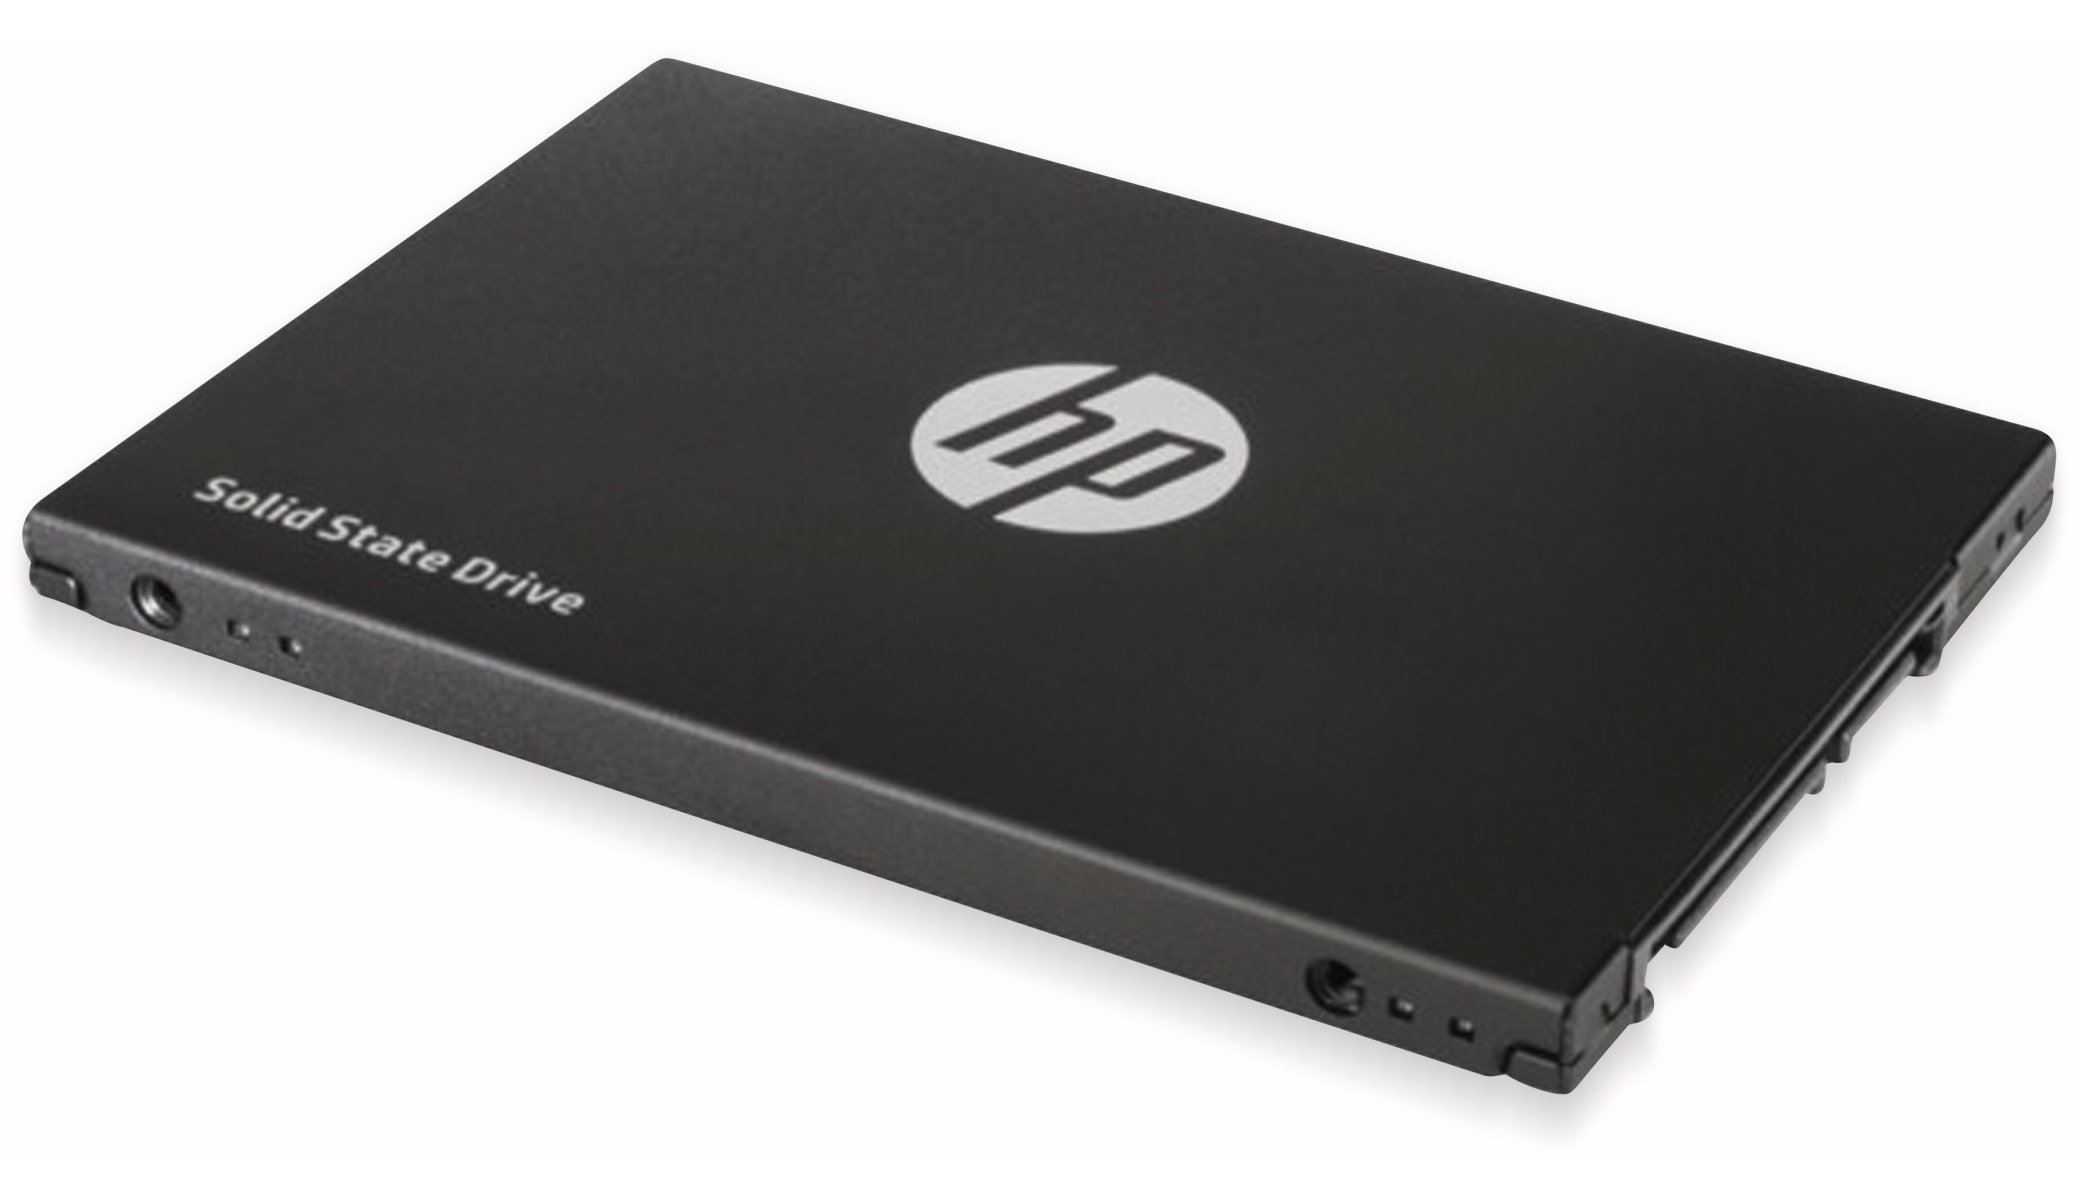 HP SATA-SSD S700 Pro, 6,35 cm (2,5"), 128GB